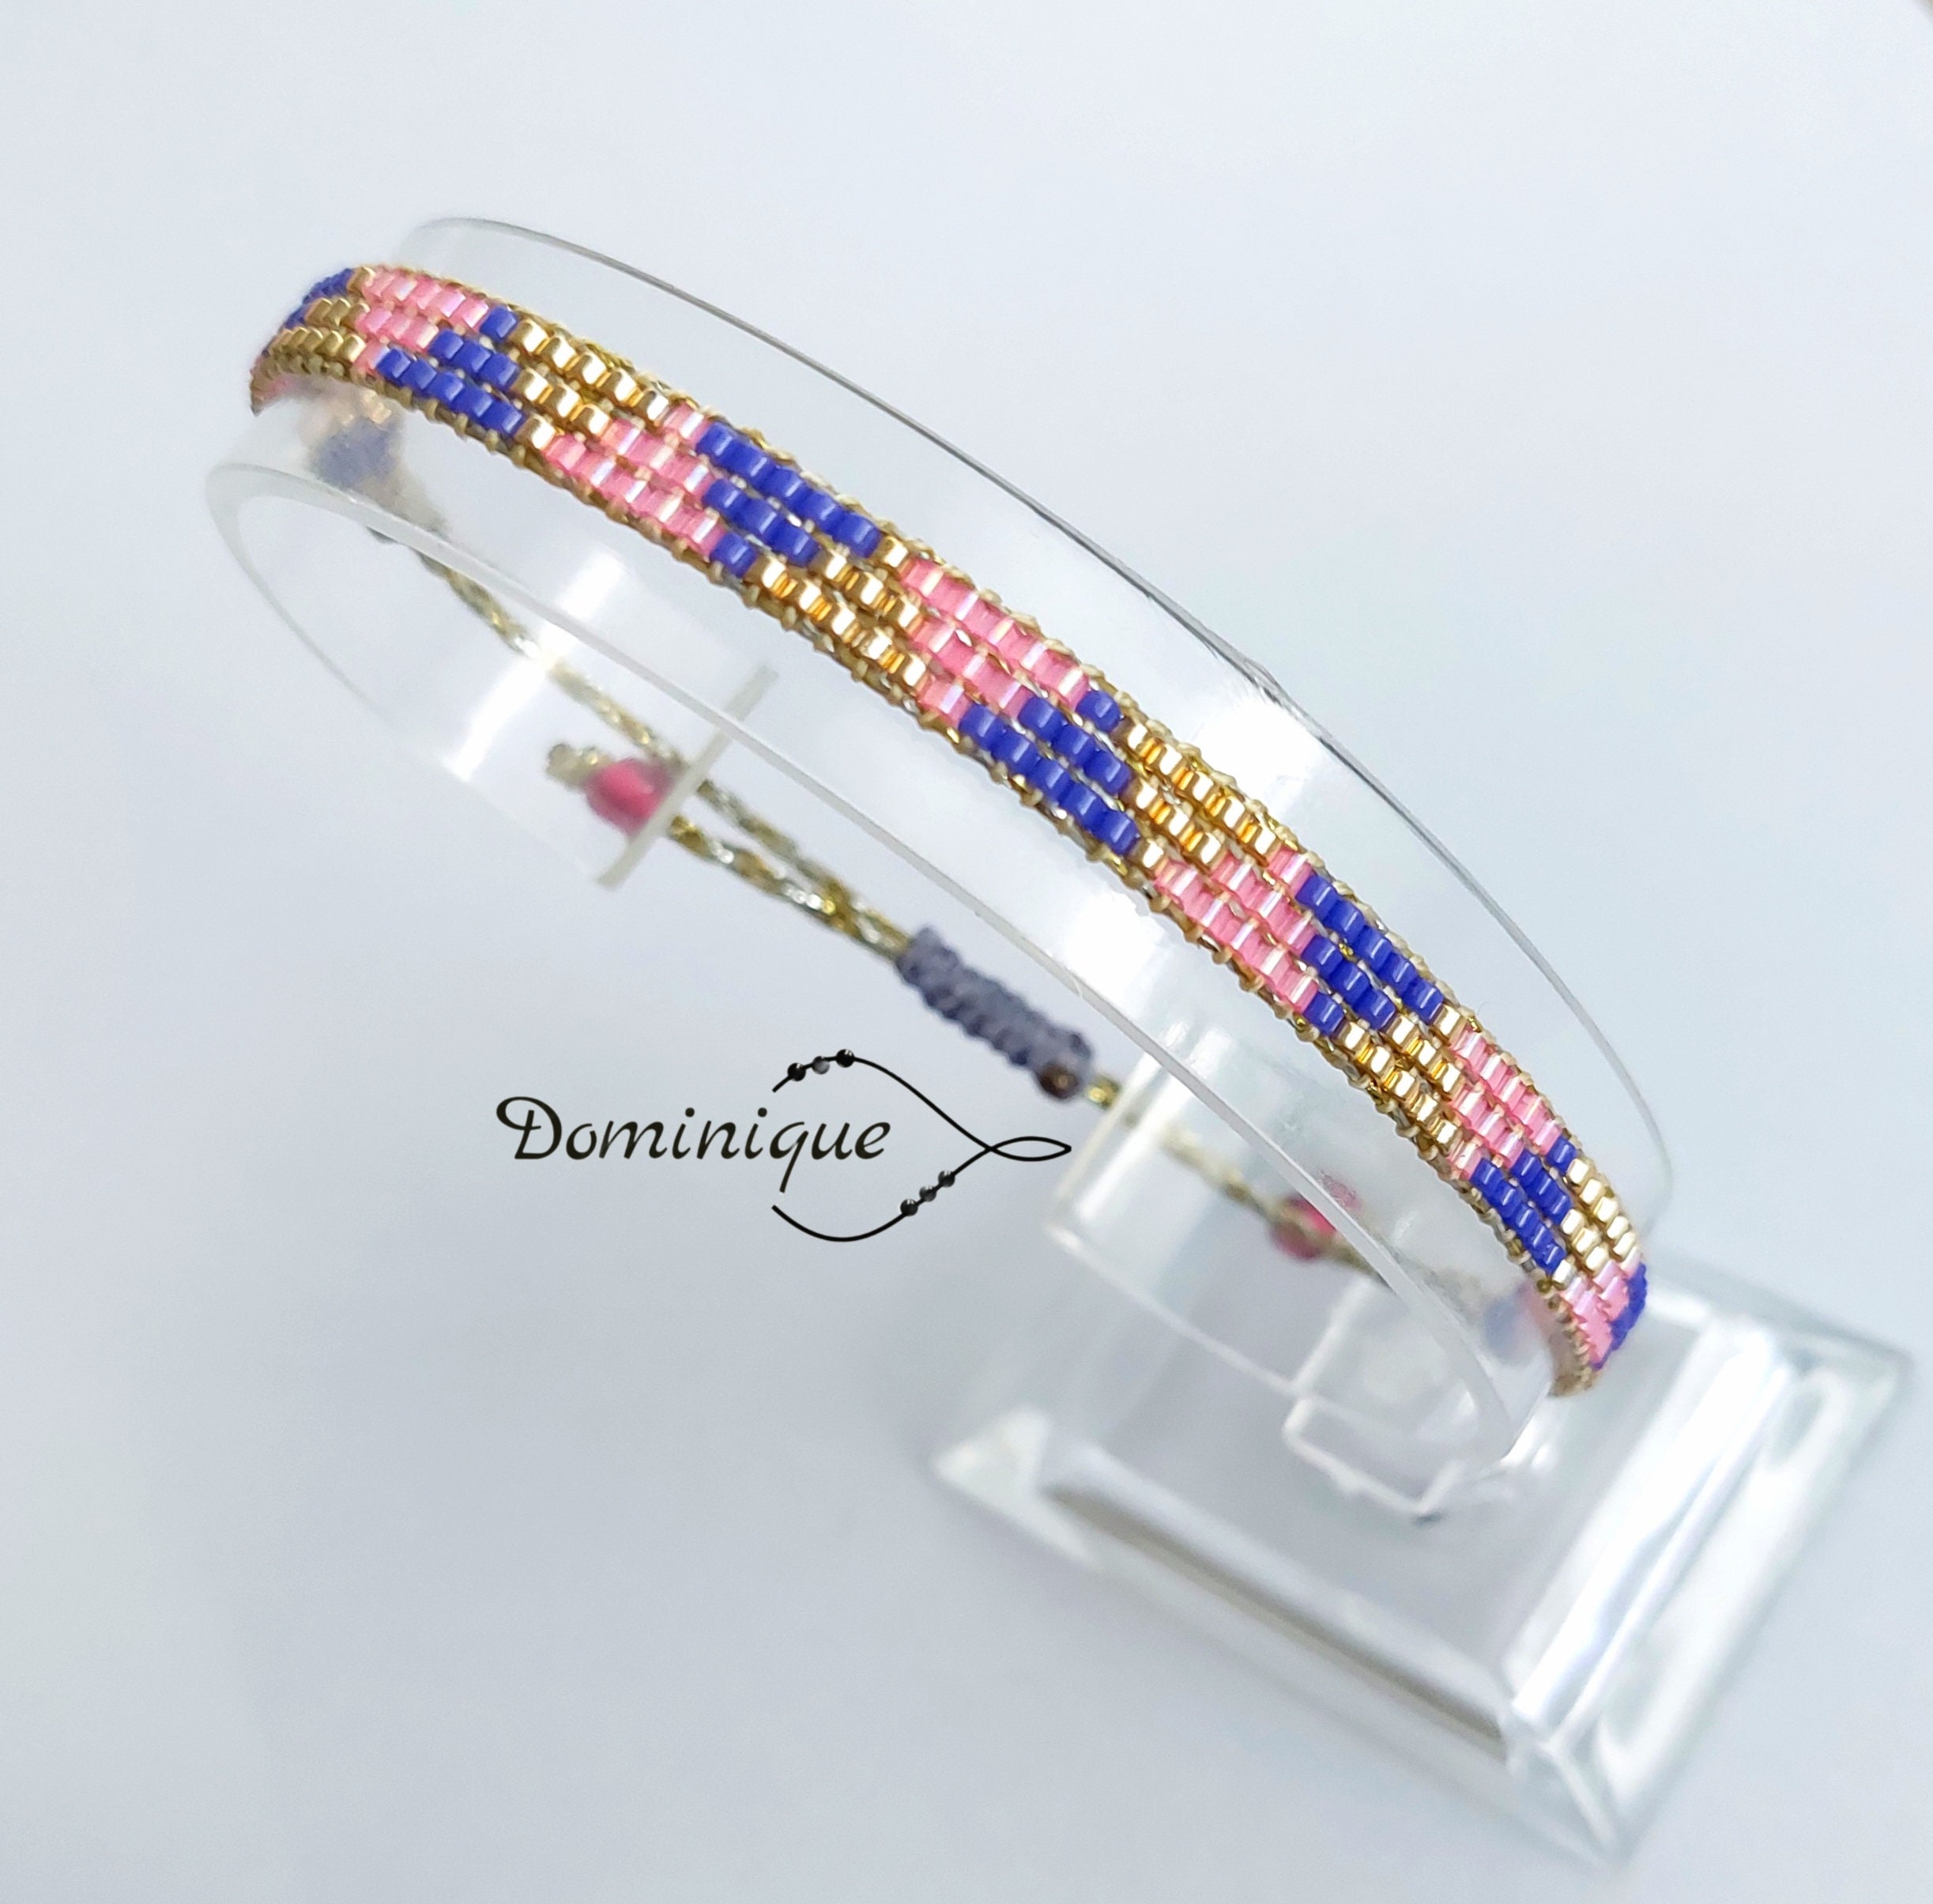 Pink Forte Gemstone Beads 106 20 Beads 8mm X 6mm Lurex Cord Bracelet 